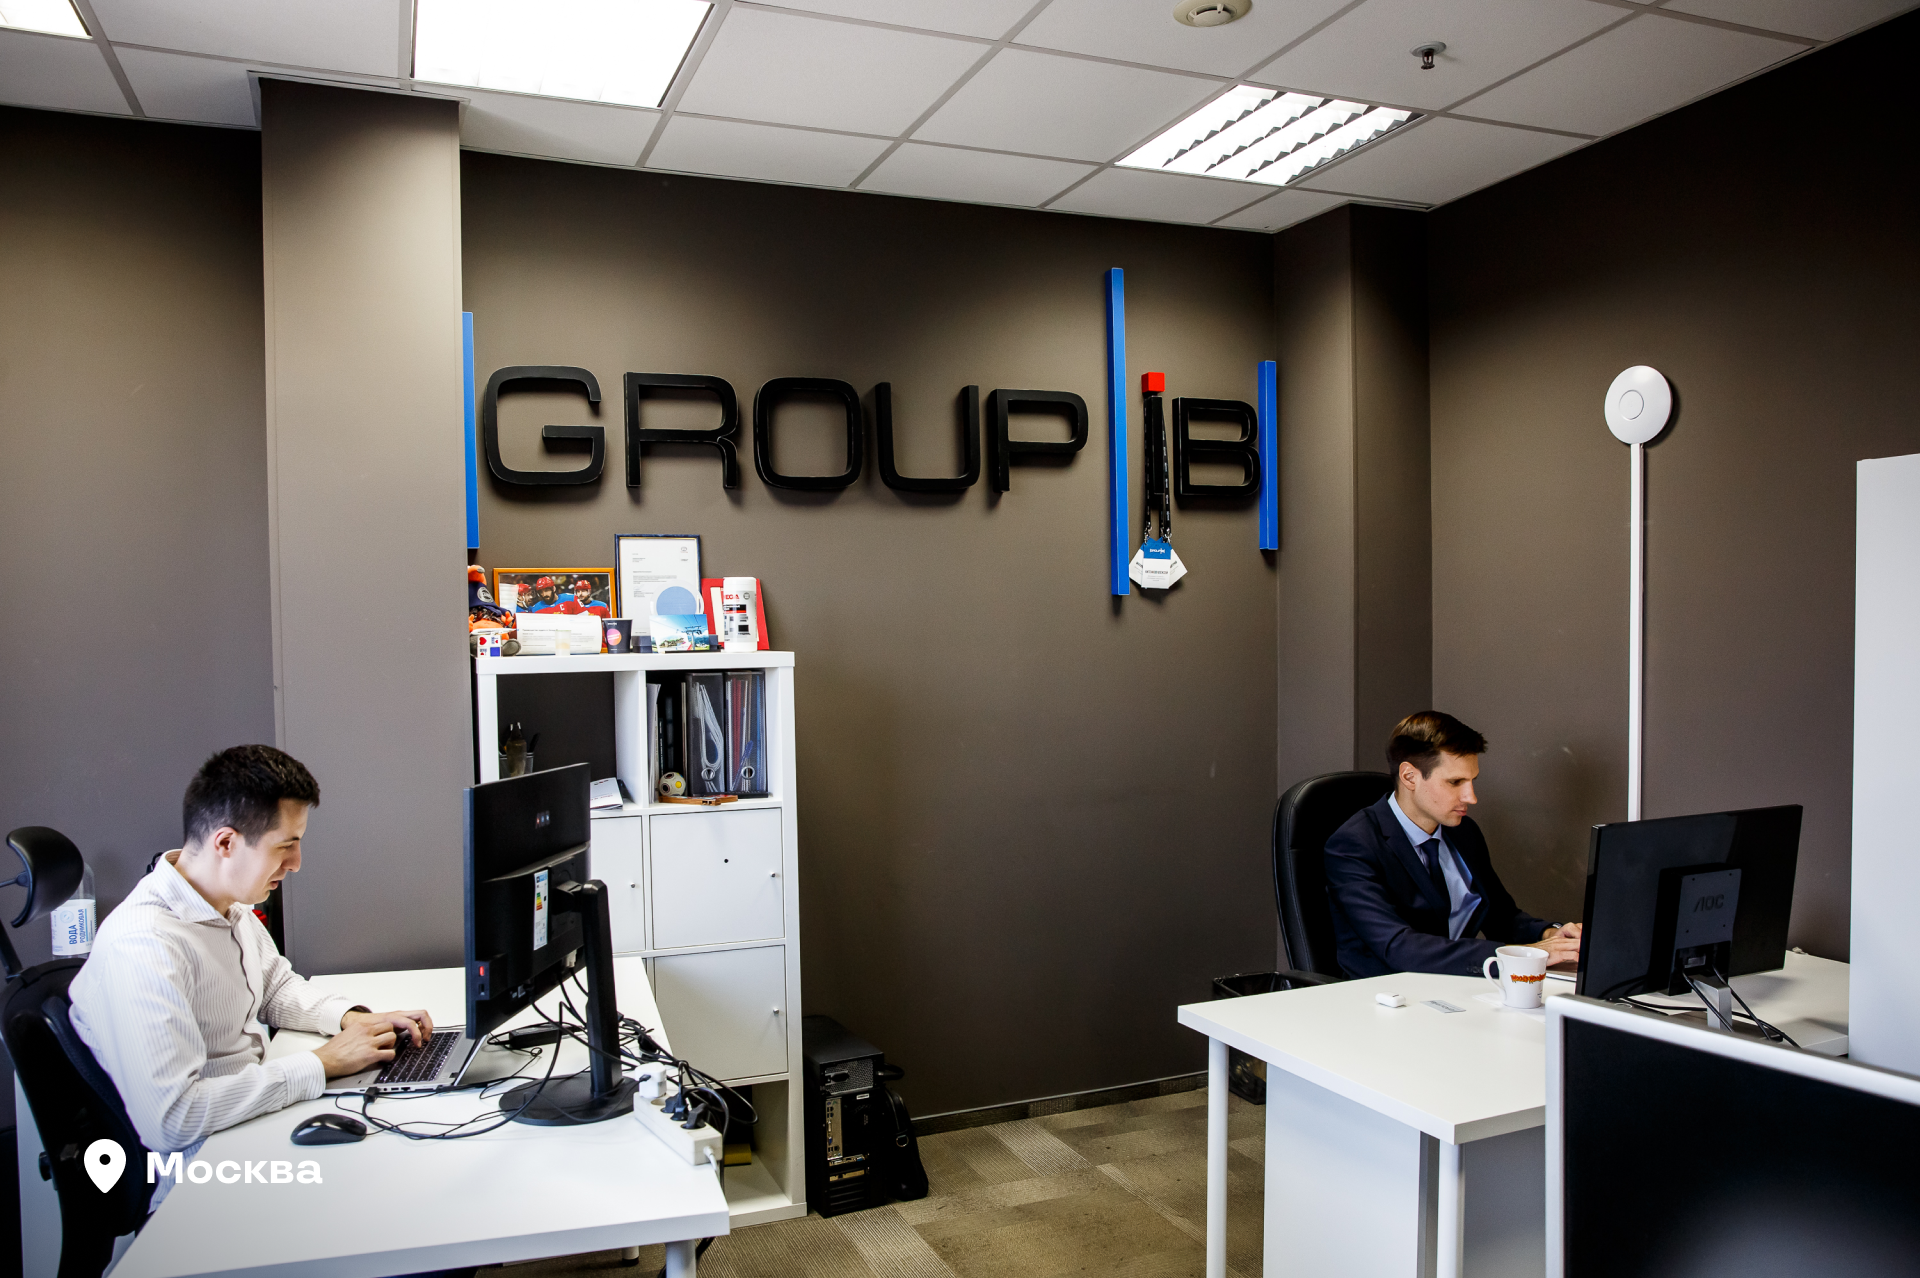 Кабинет групп сайт. Компания Group-IB. Group IB офис. Group IB логотип. Группа компаний "айби групп".